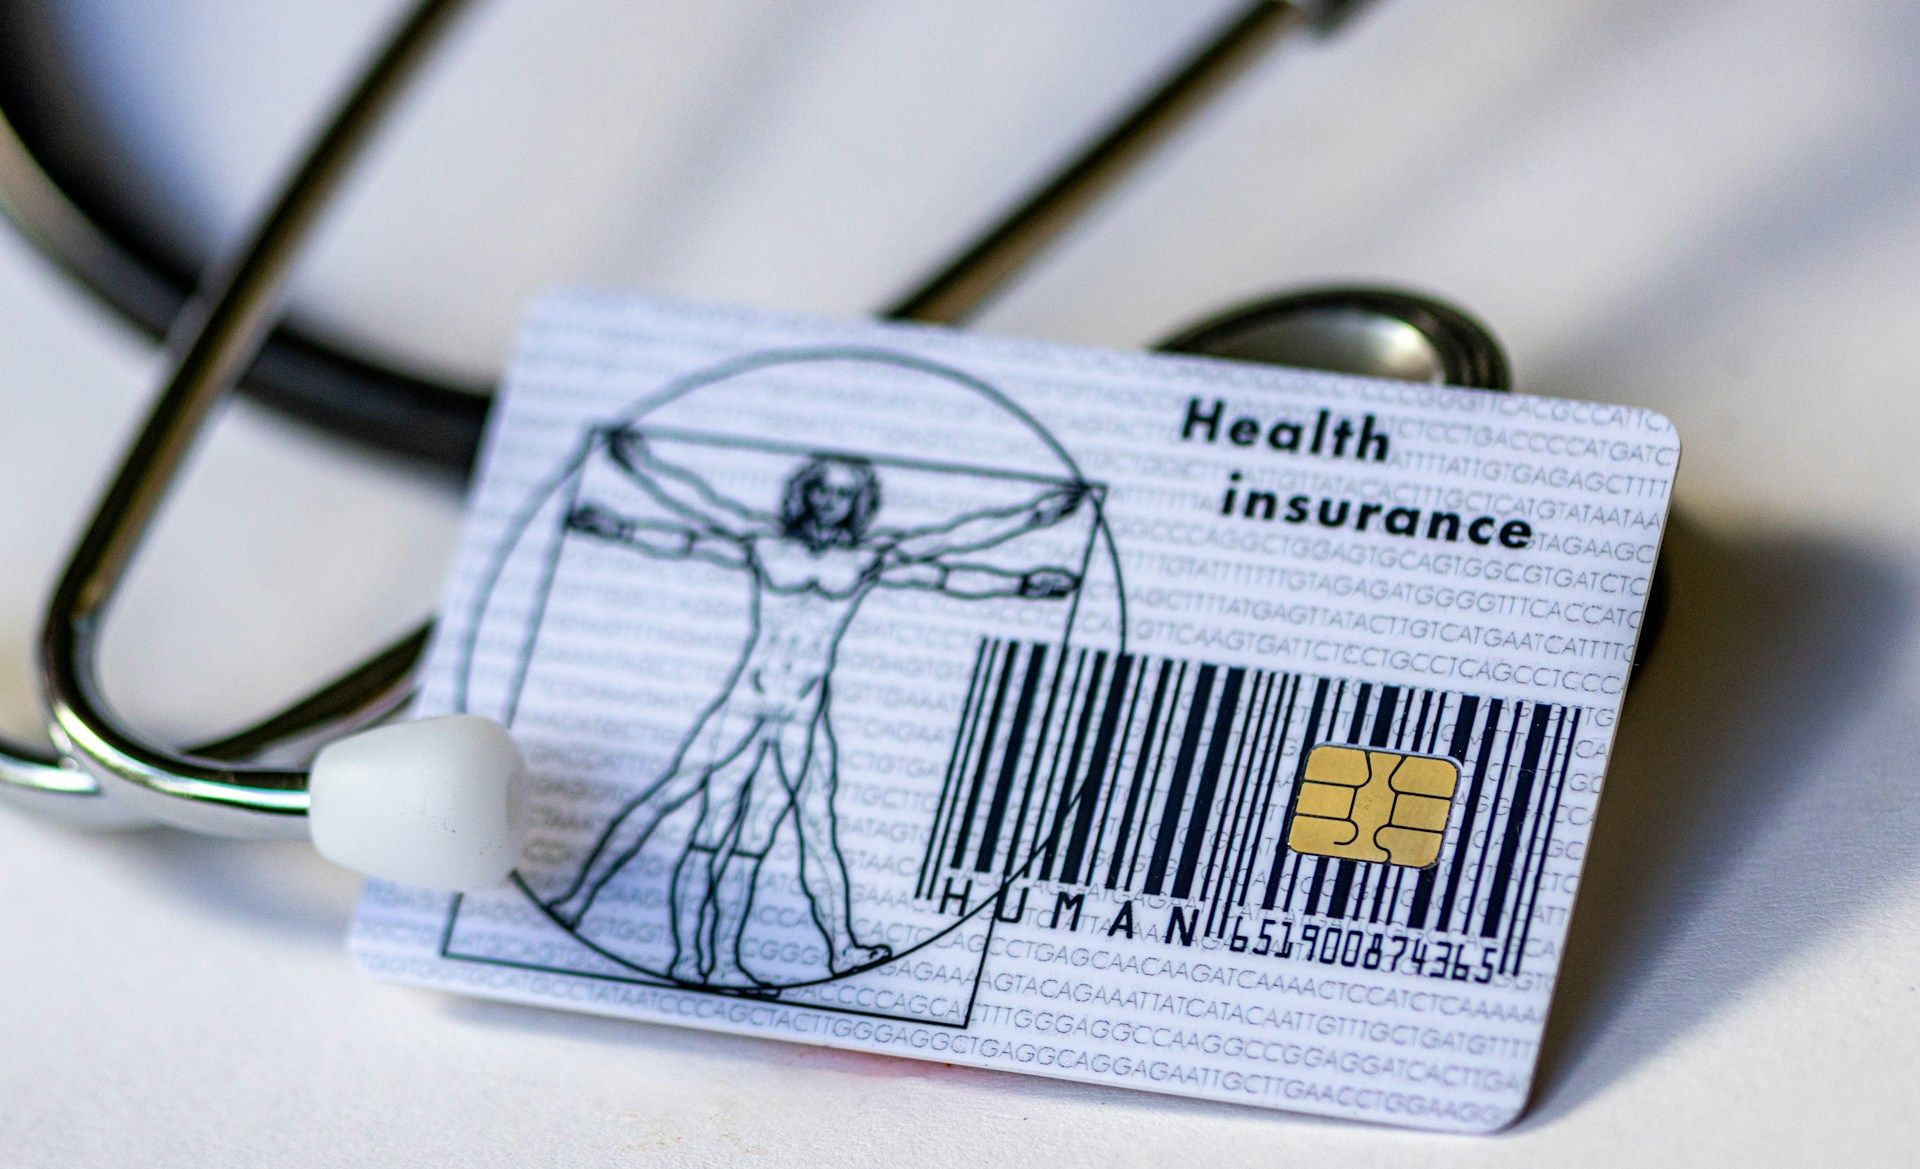 Health insurance card